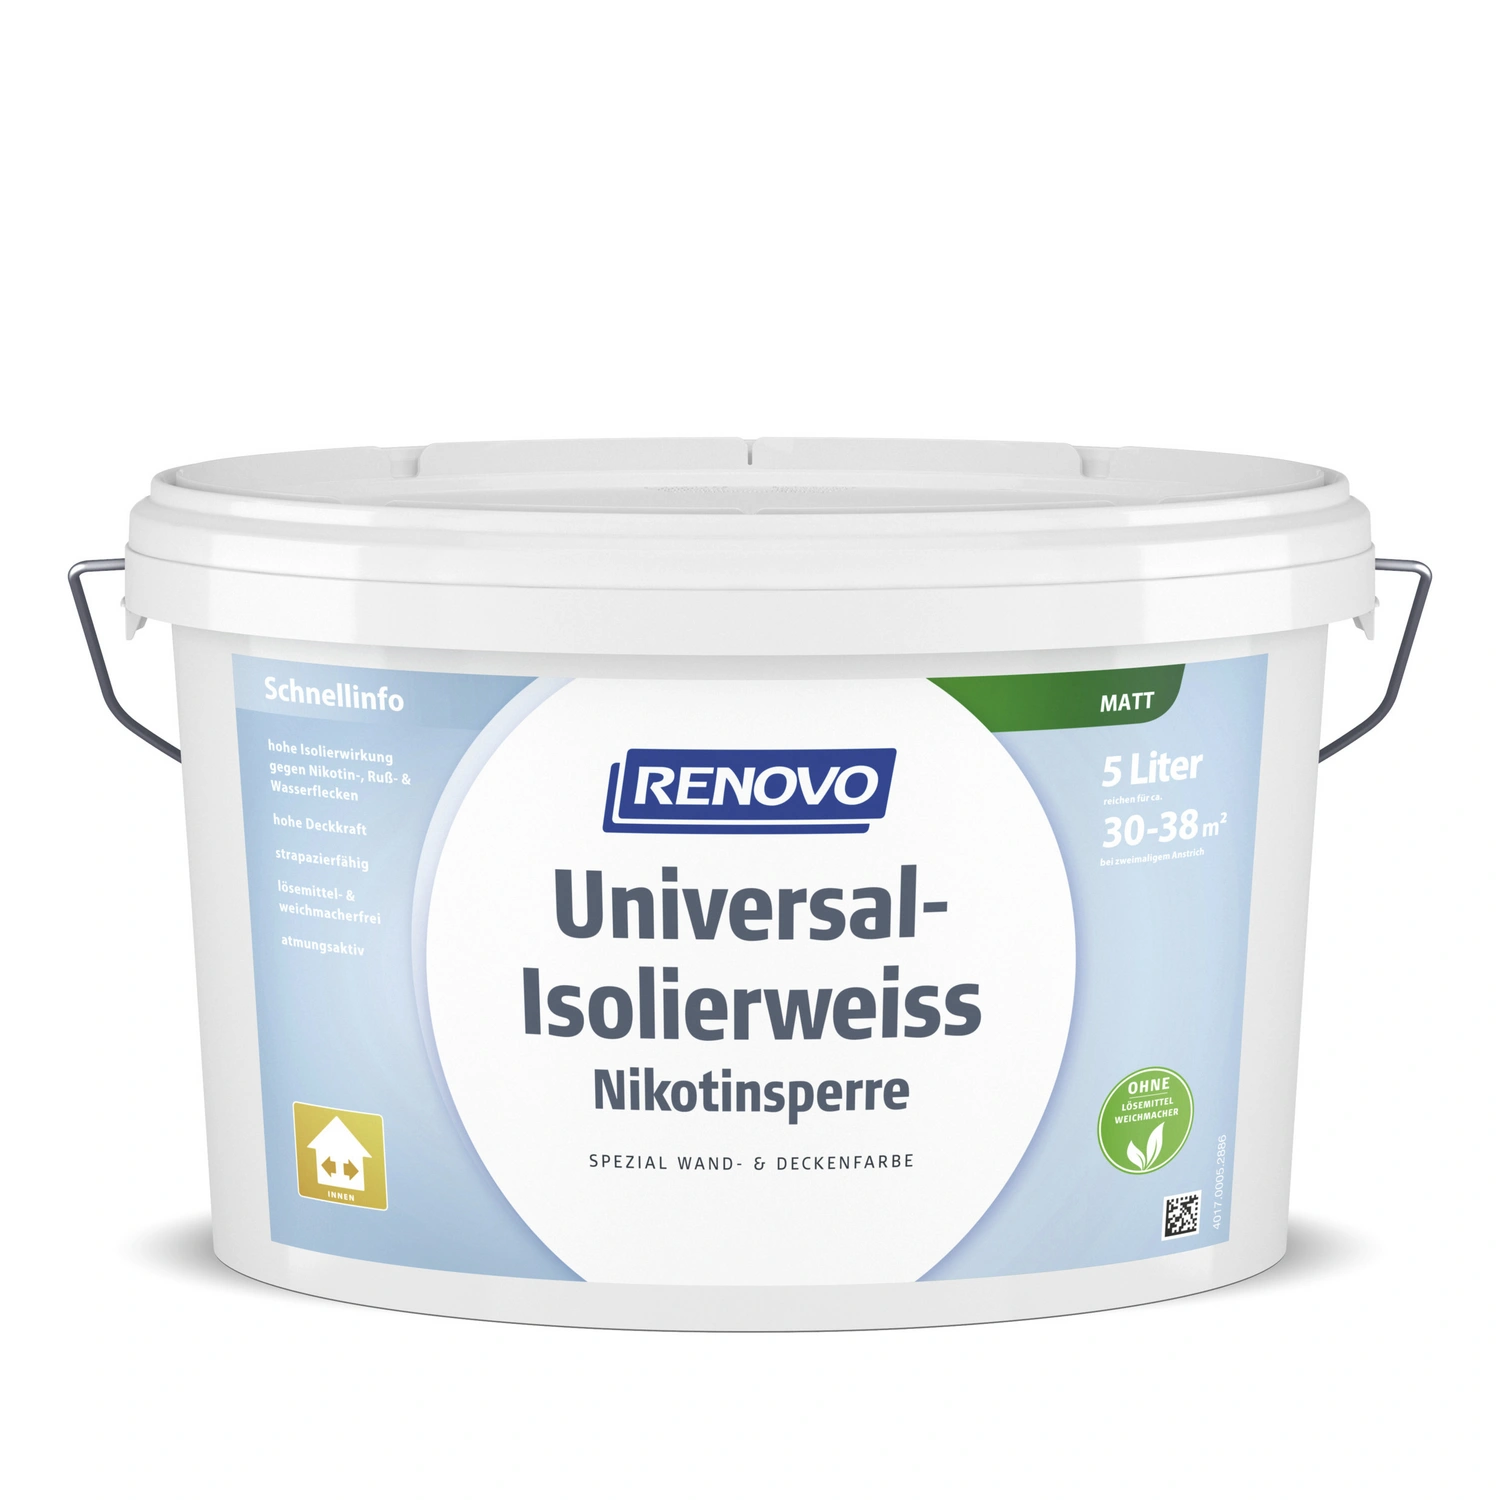 RENOVO Universal-Isolierweiss matt, weiss 